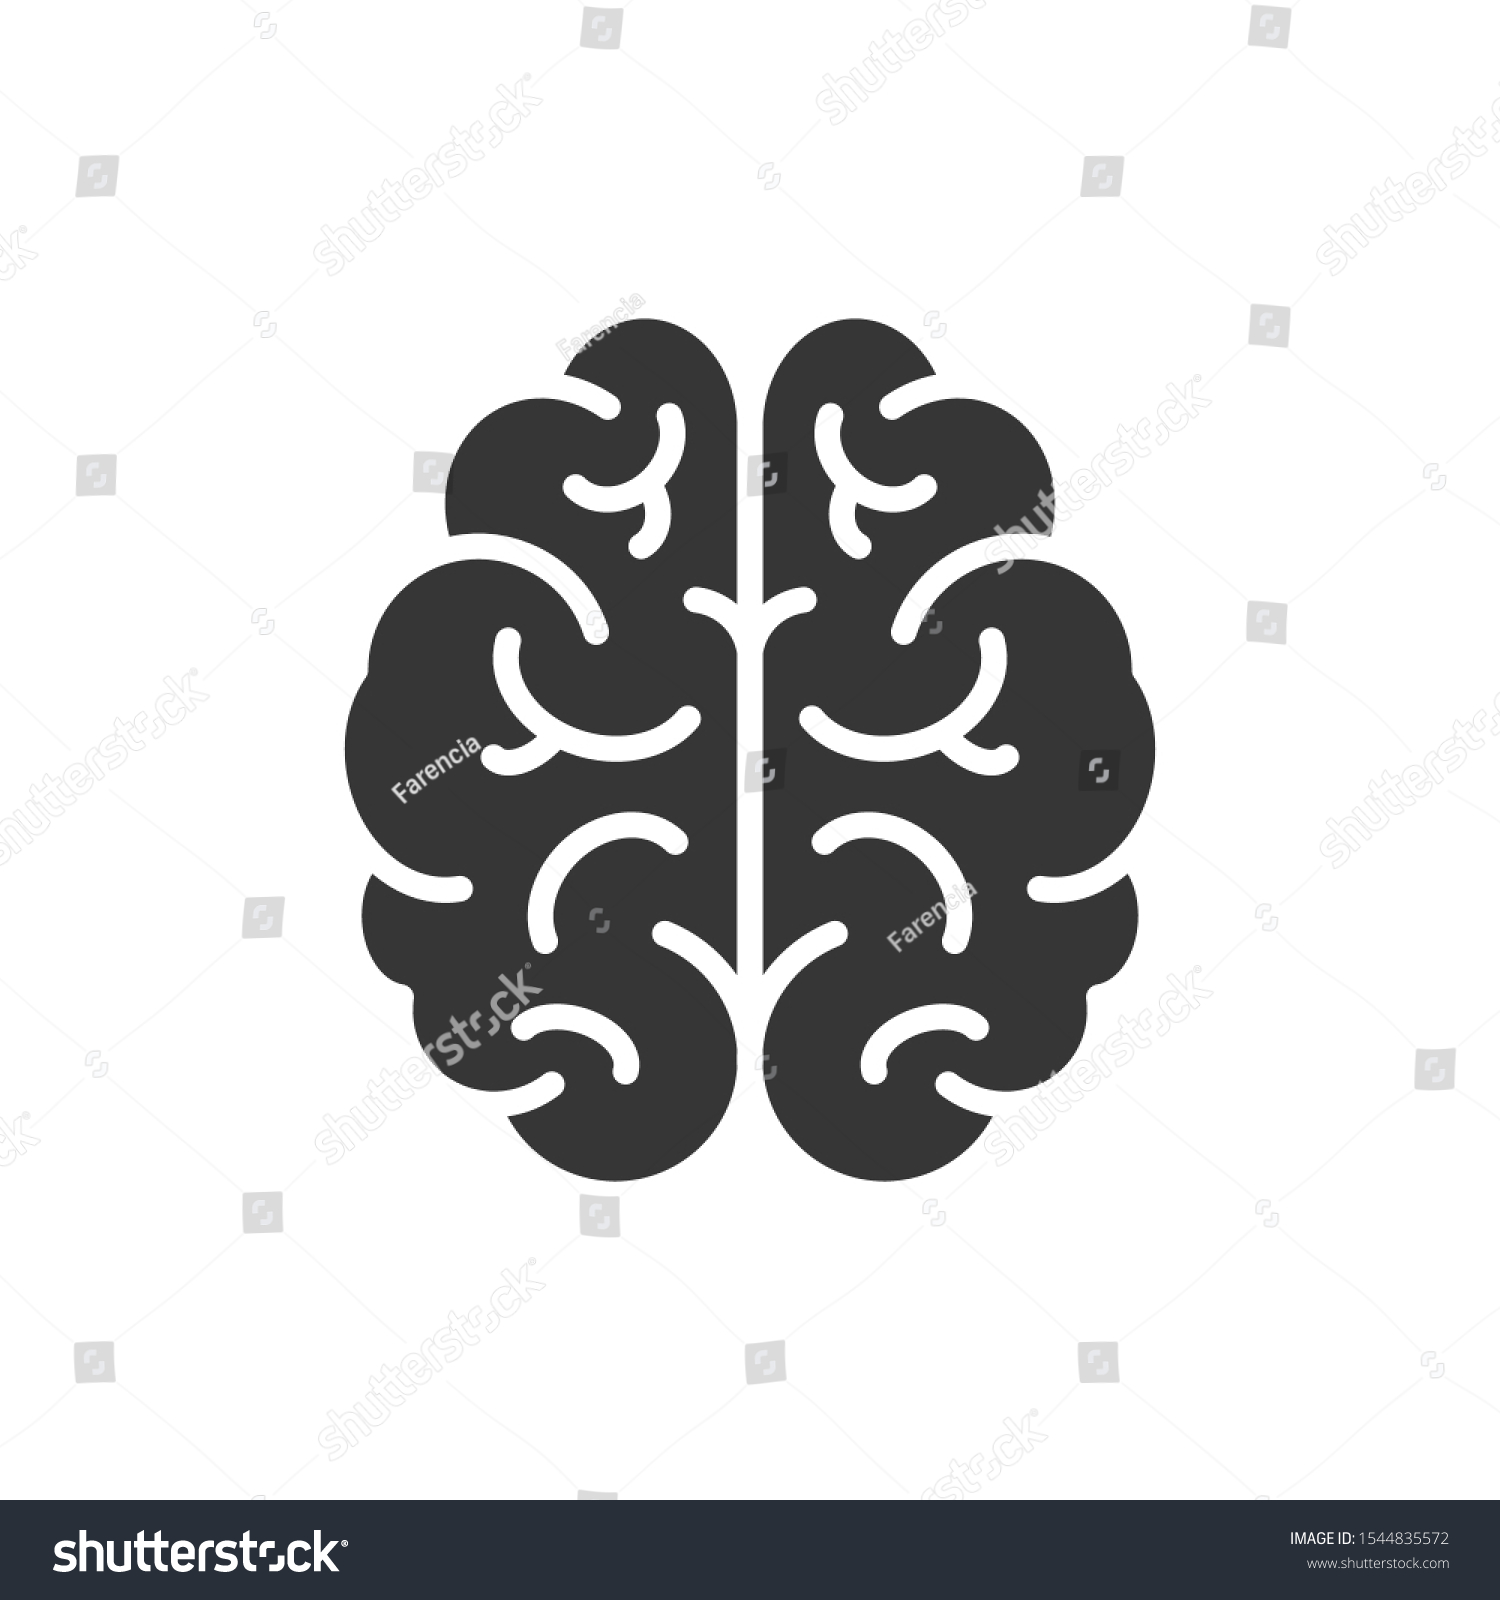 Brain Icon Vector Illustration. Logo Template. #1544835572